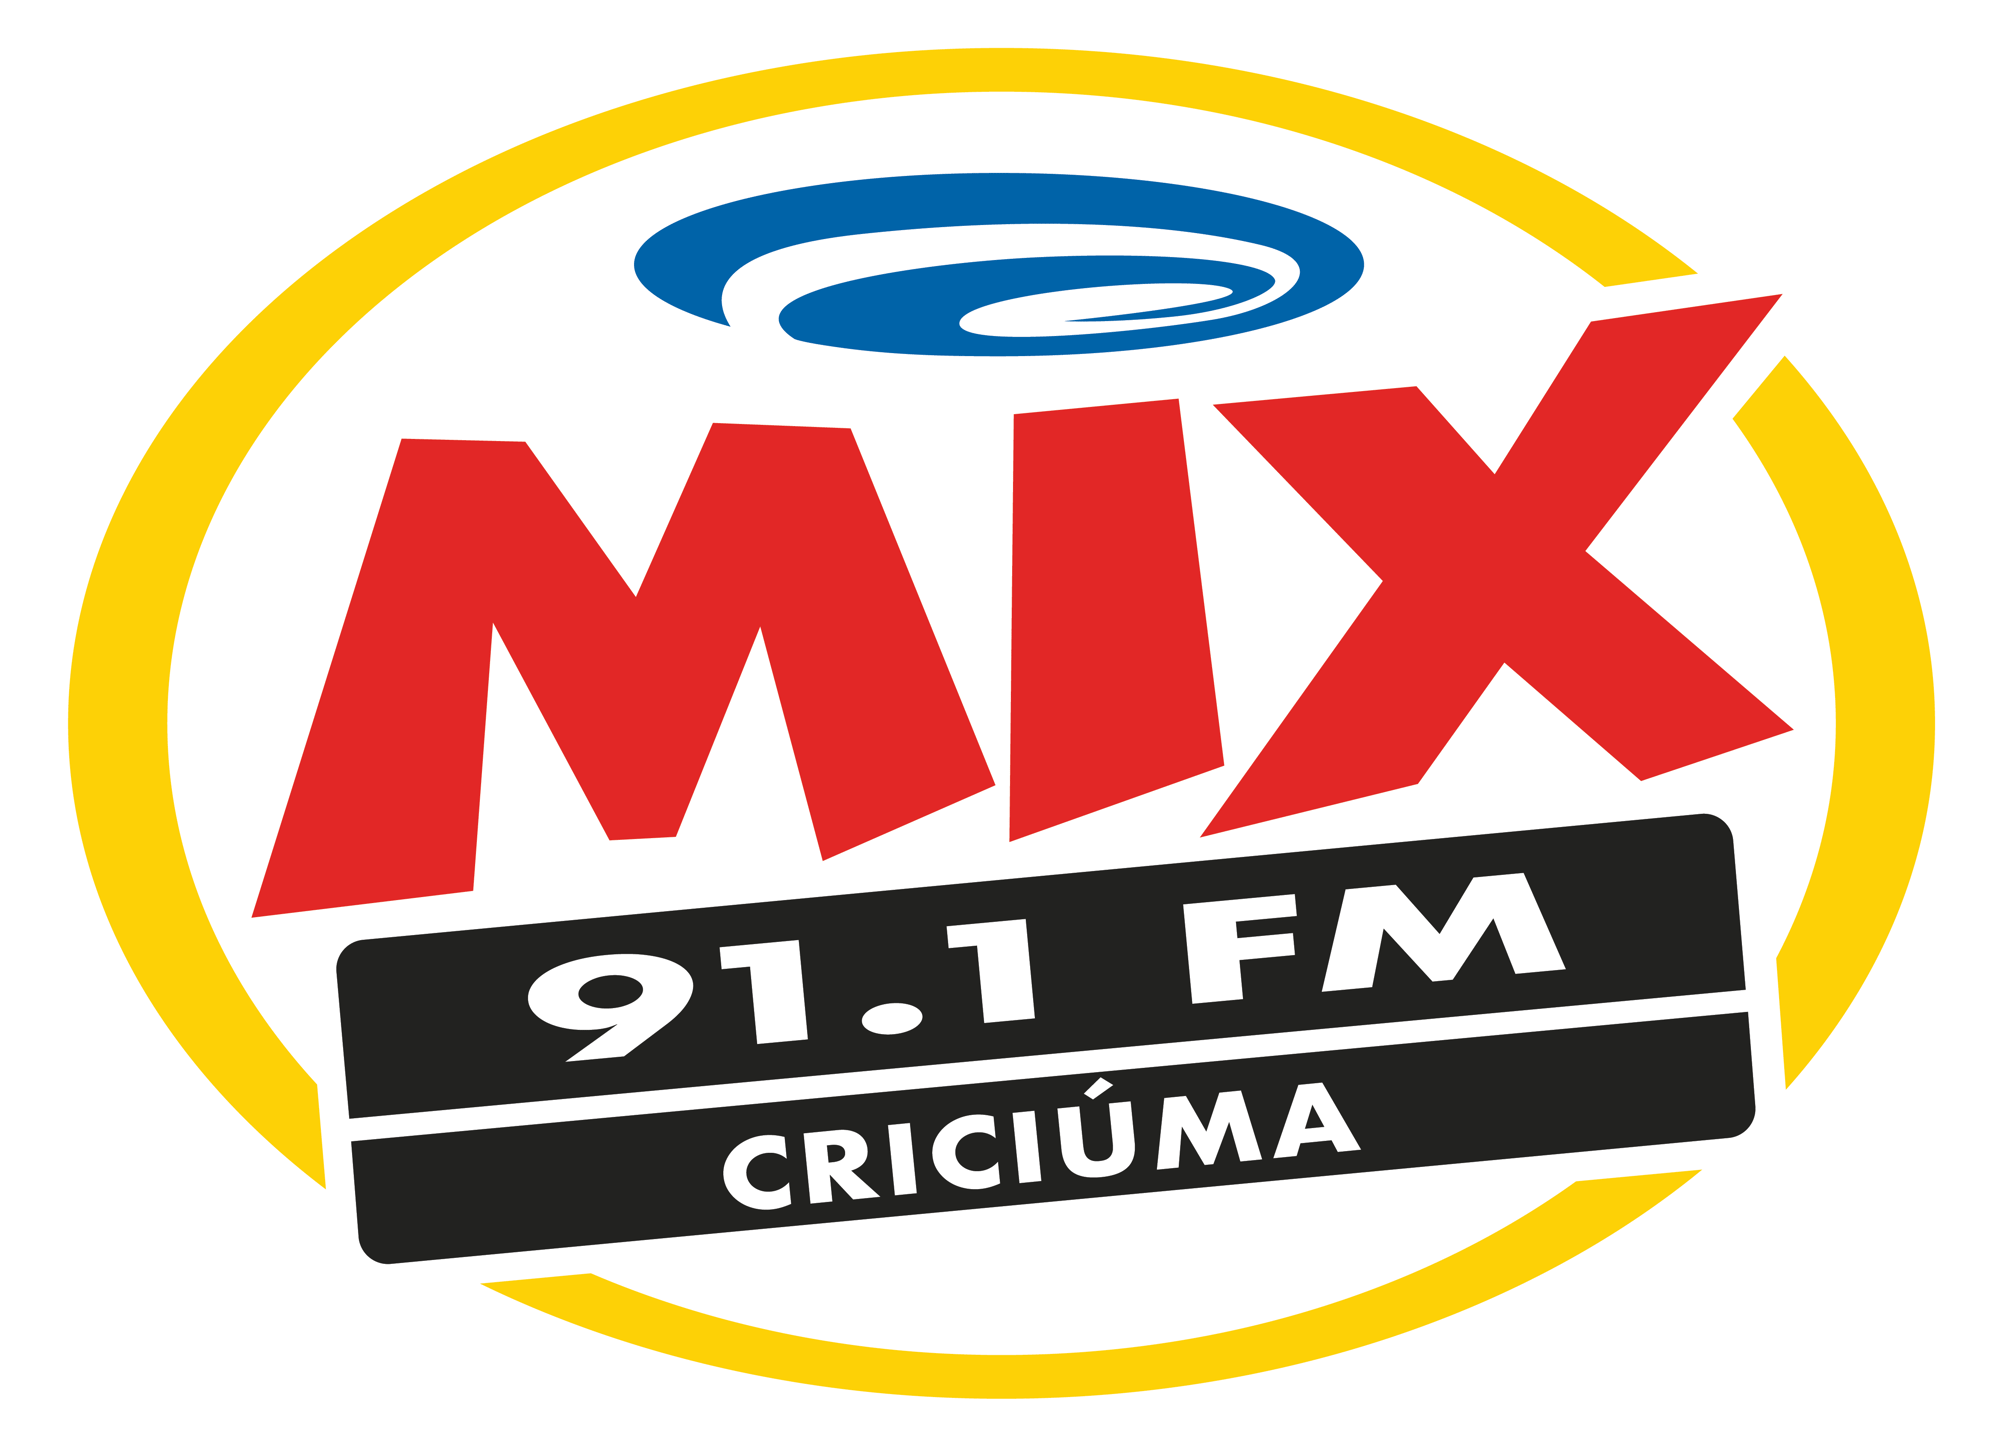 MIX FM CRICIUMA